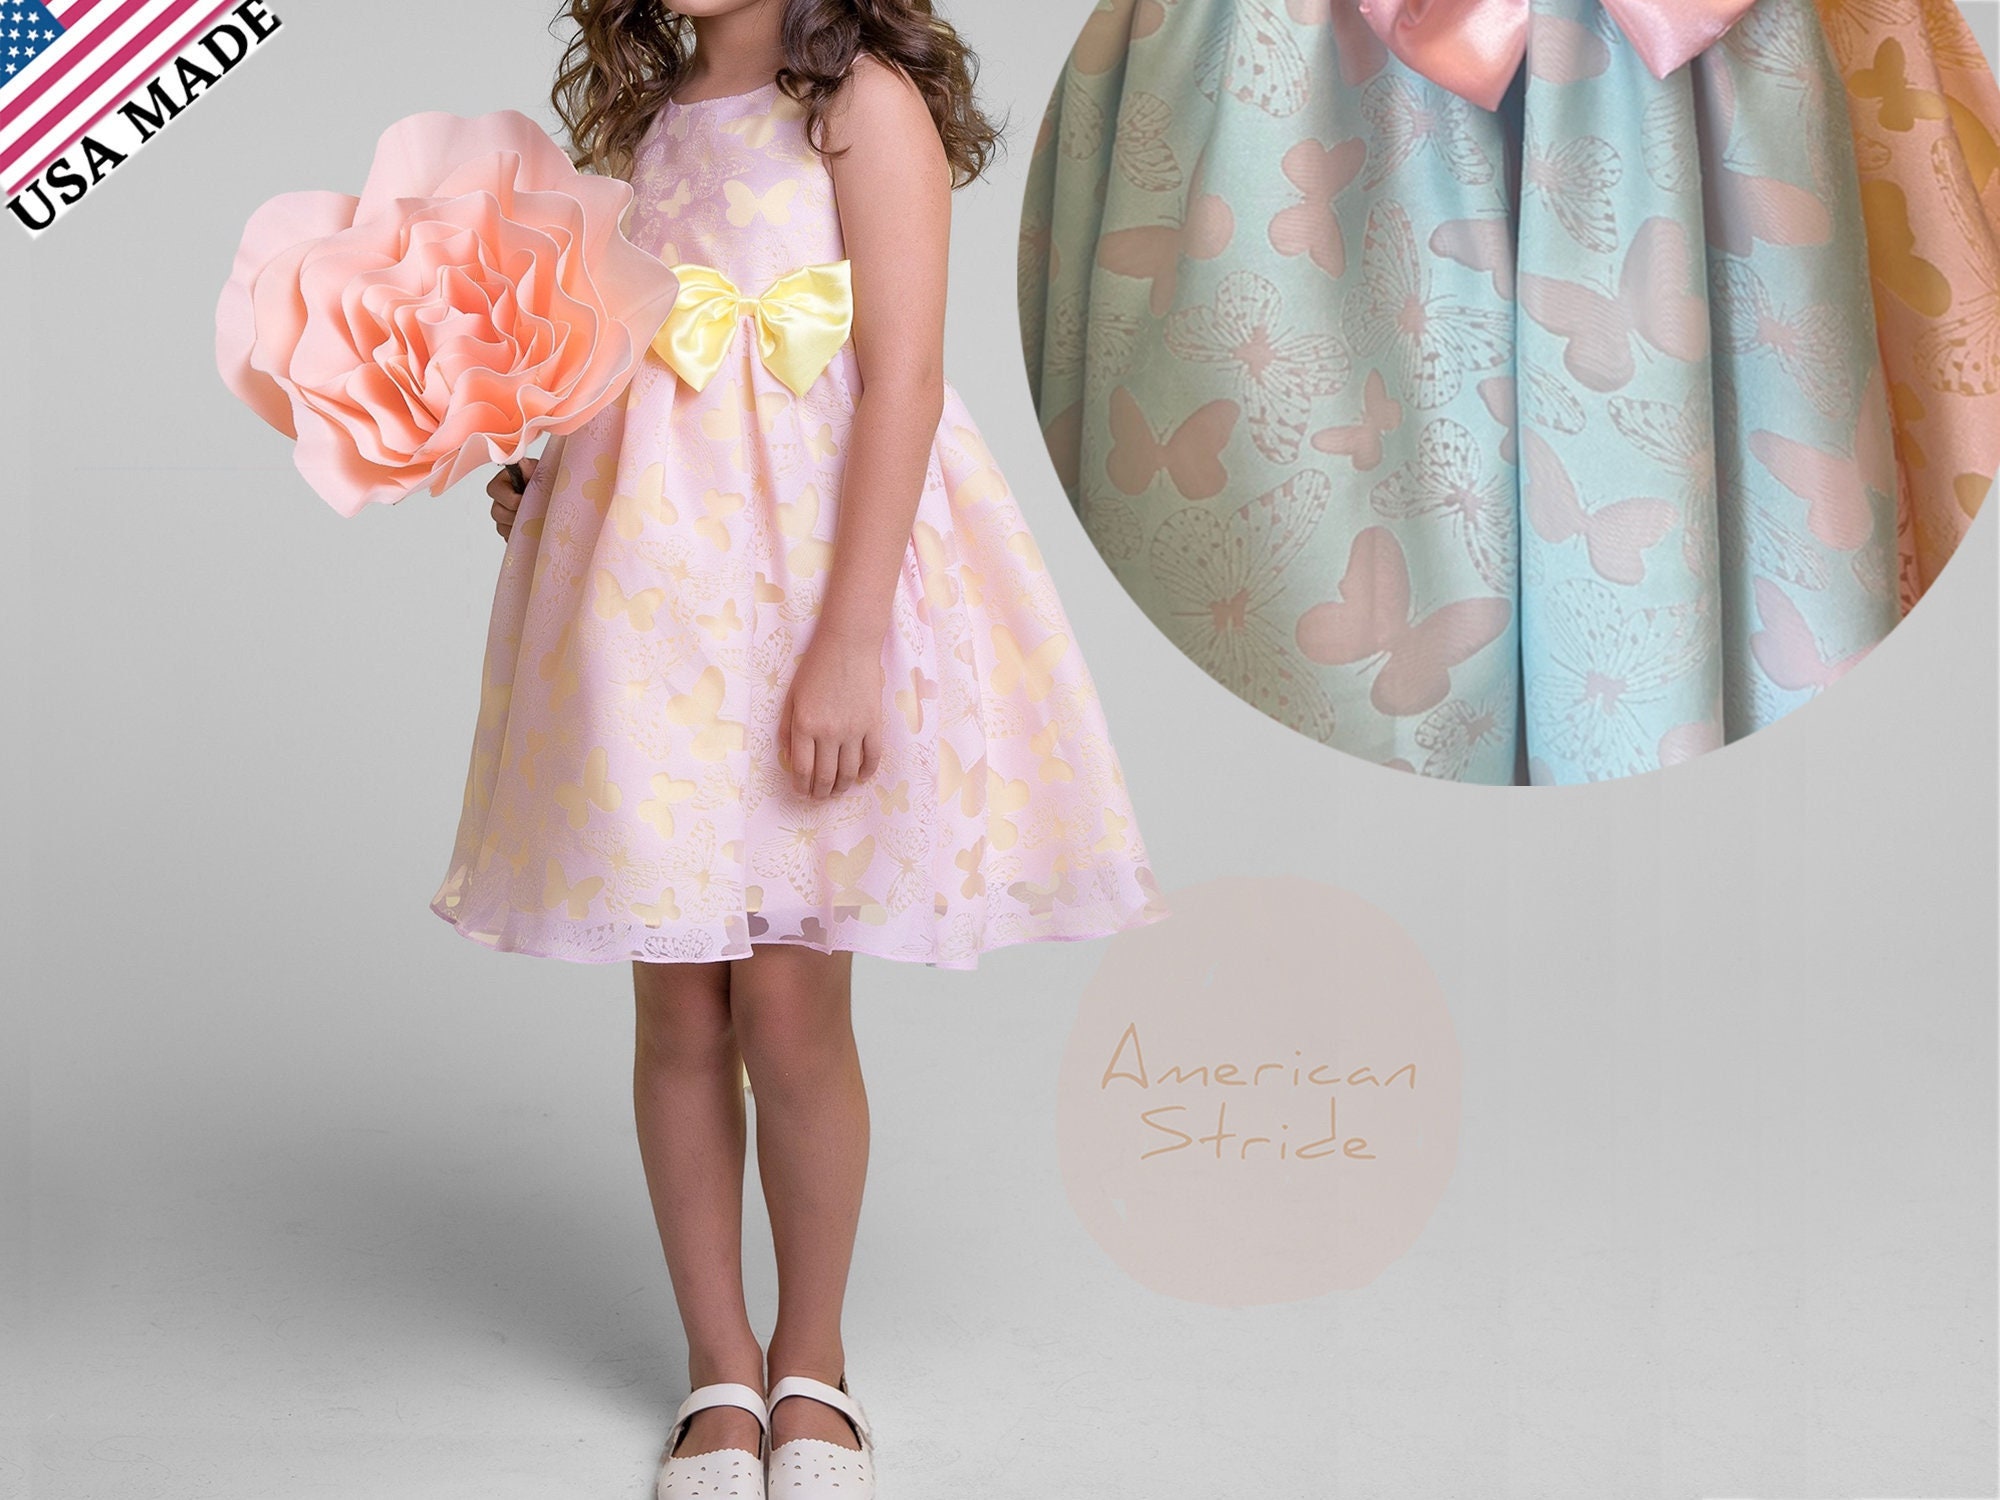 Simplicity 6859 12 14, Girls Fancy Dress Pattern, First Communion Dress  Pattern, Drop Waist Dress Pattern, Sewing Patterns for Kids 